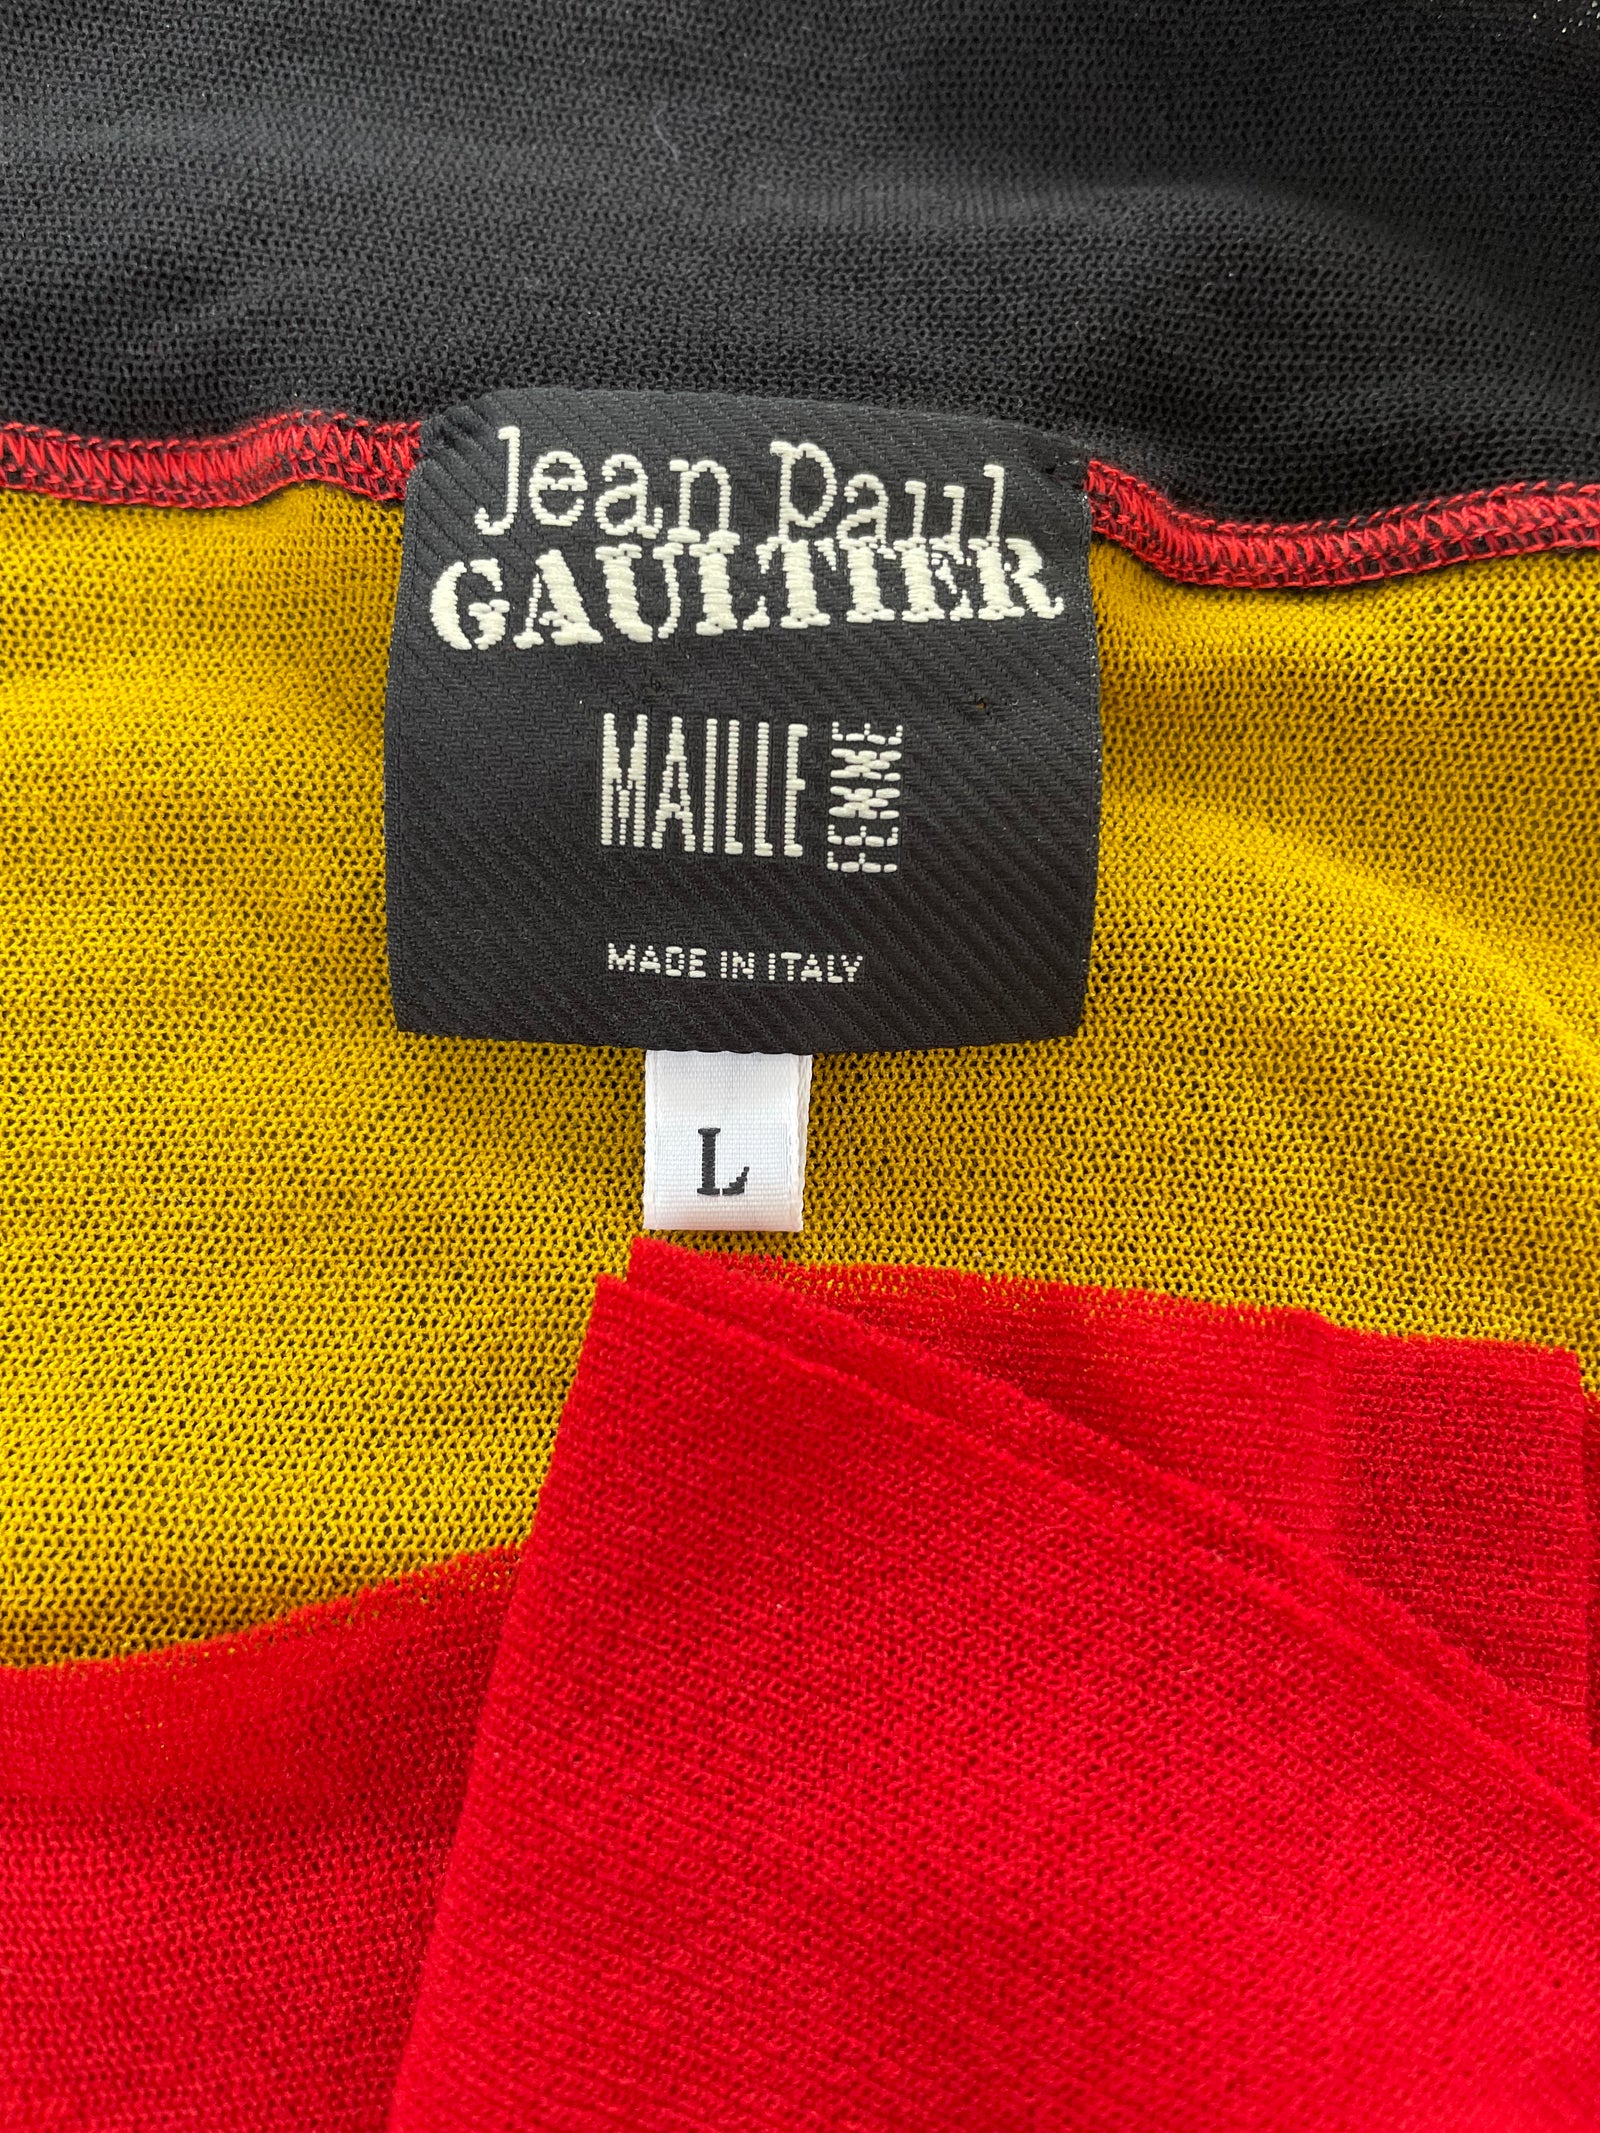 Jean Paul Gaultier mesh cardigan